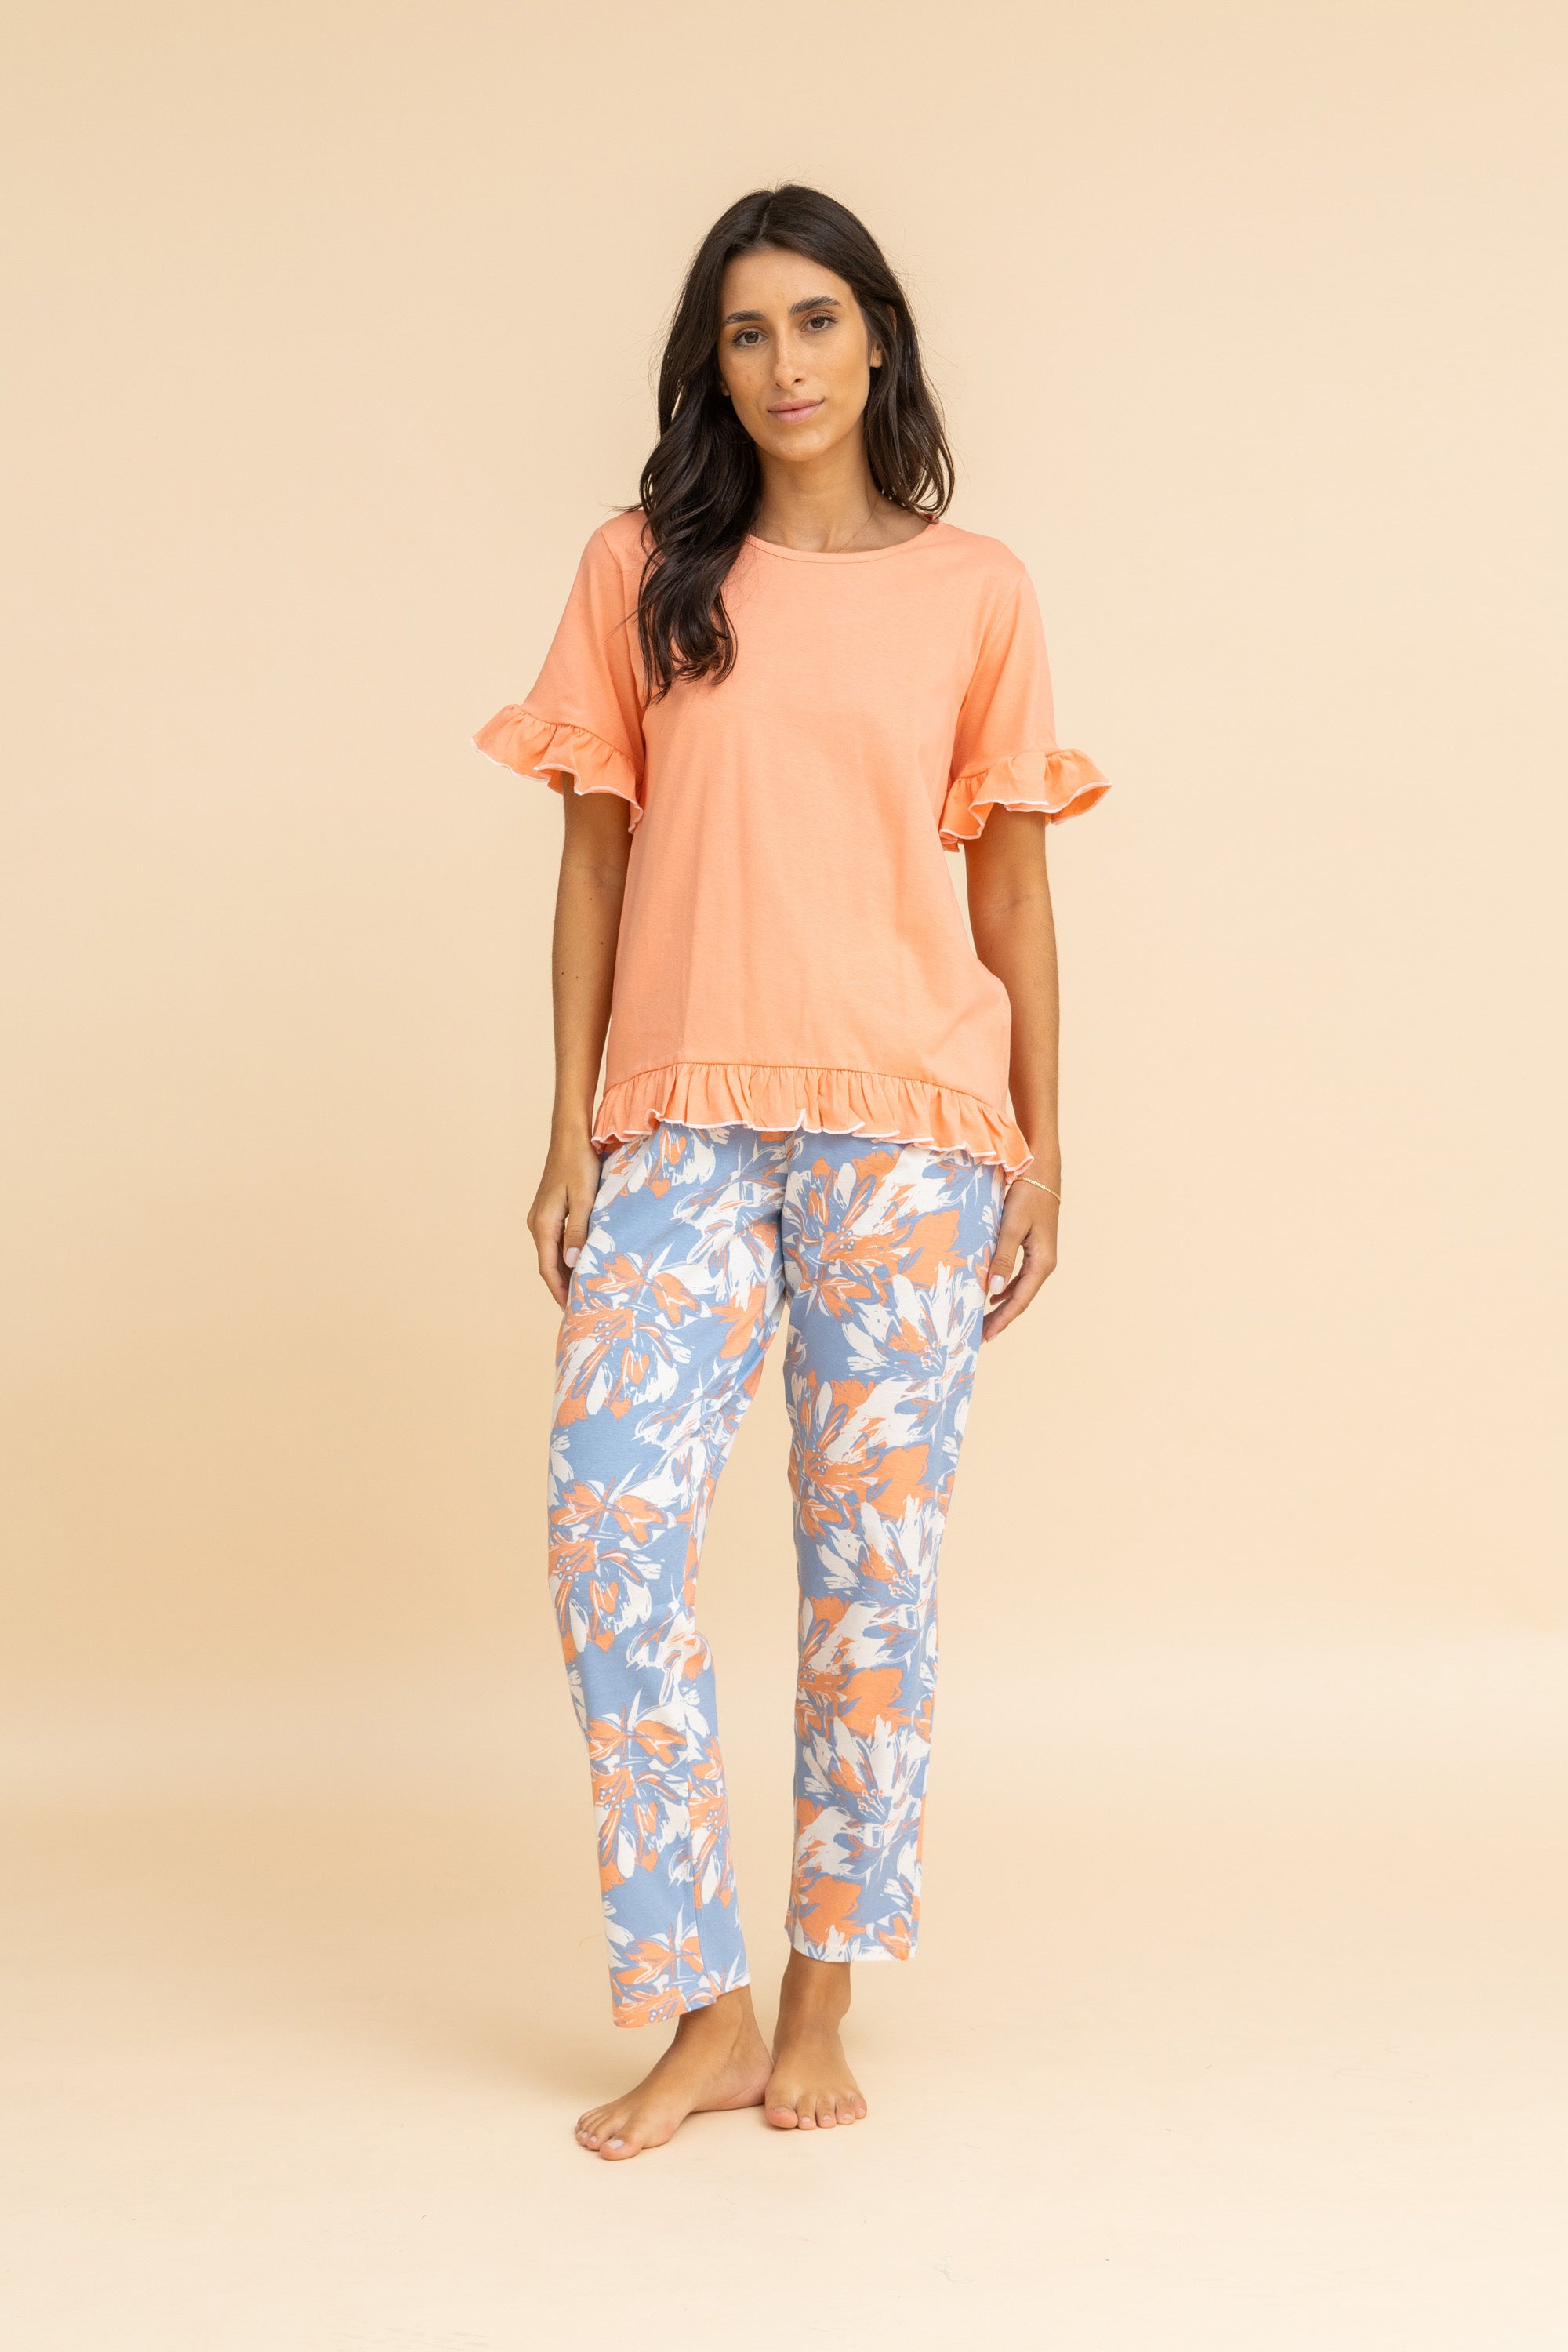 2 Tone Pajama with Printed Pants